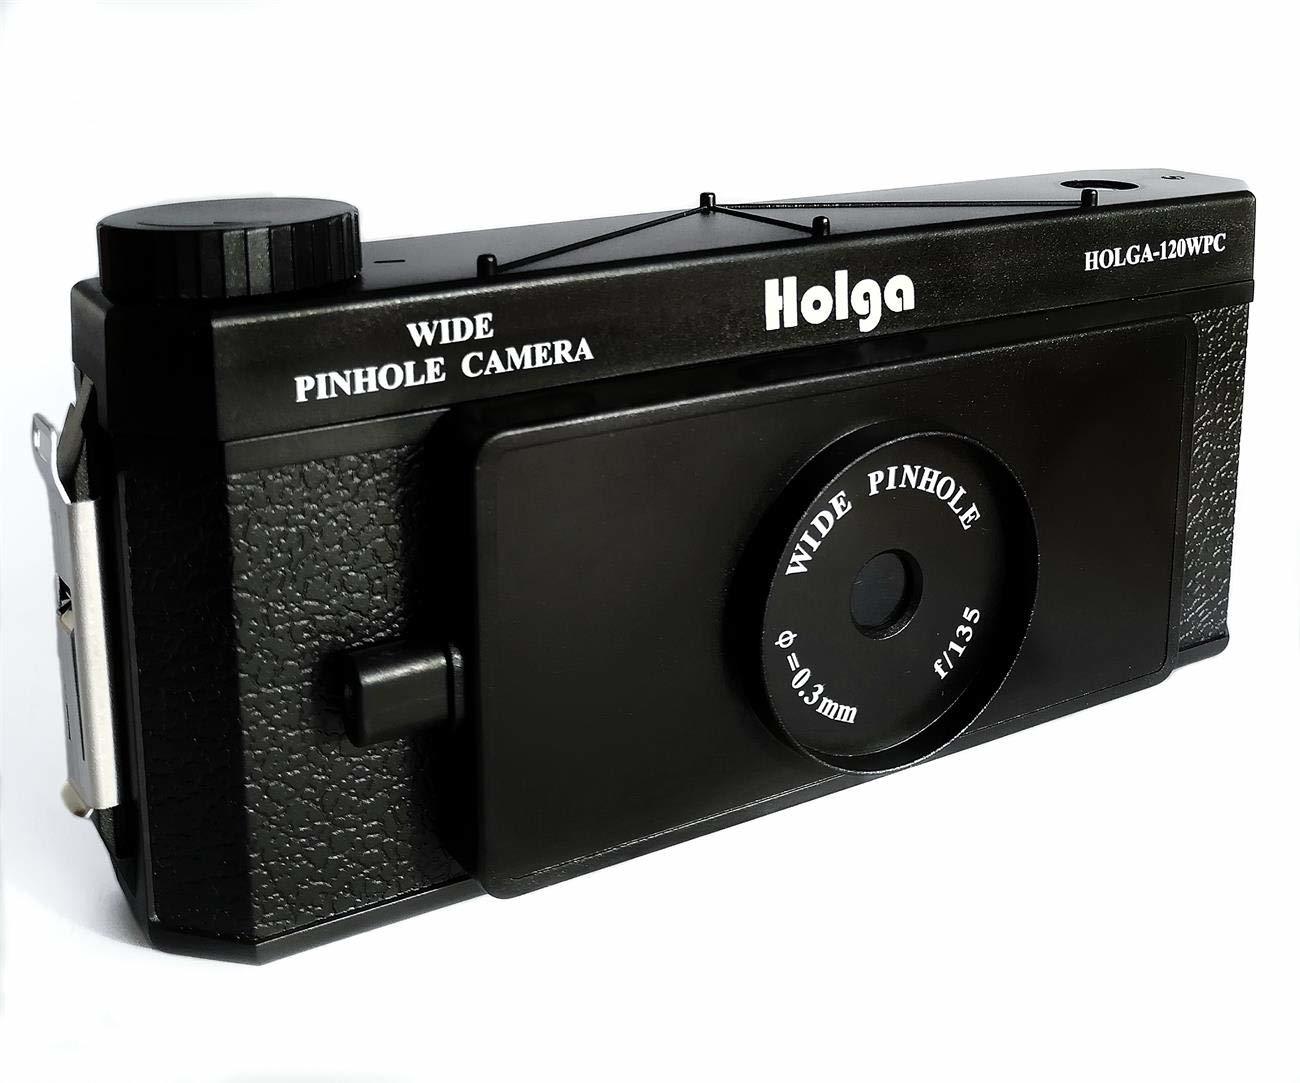 Holga 120 WPC Panoramic Camera